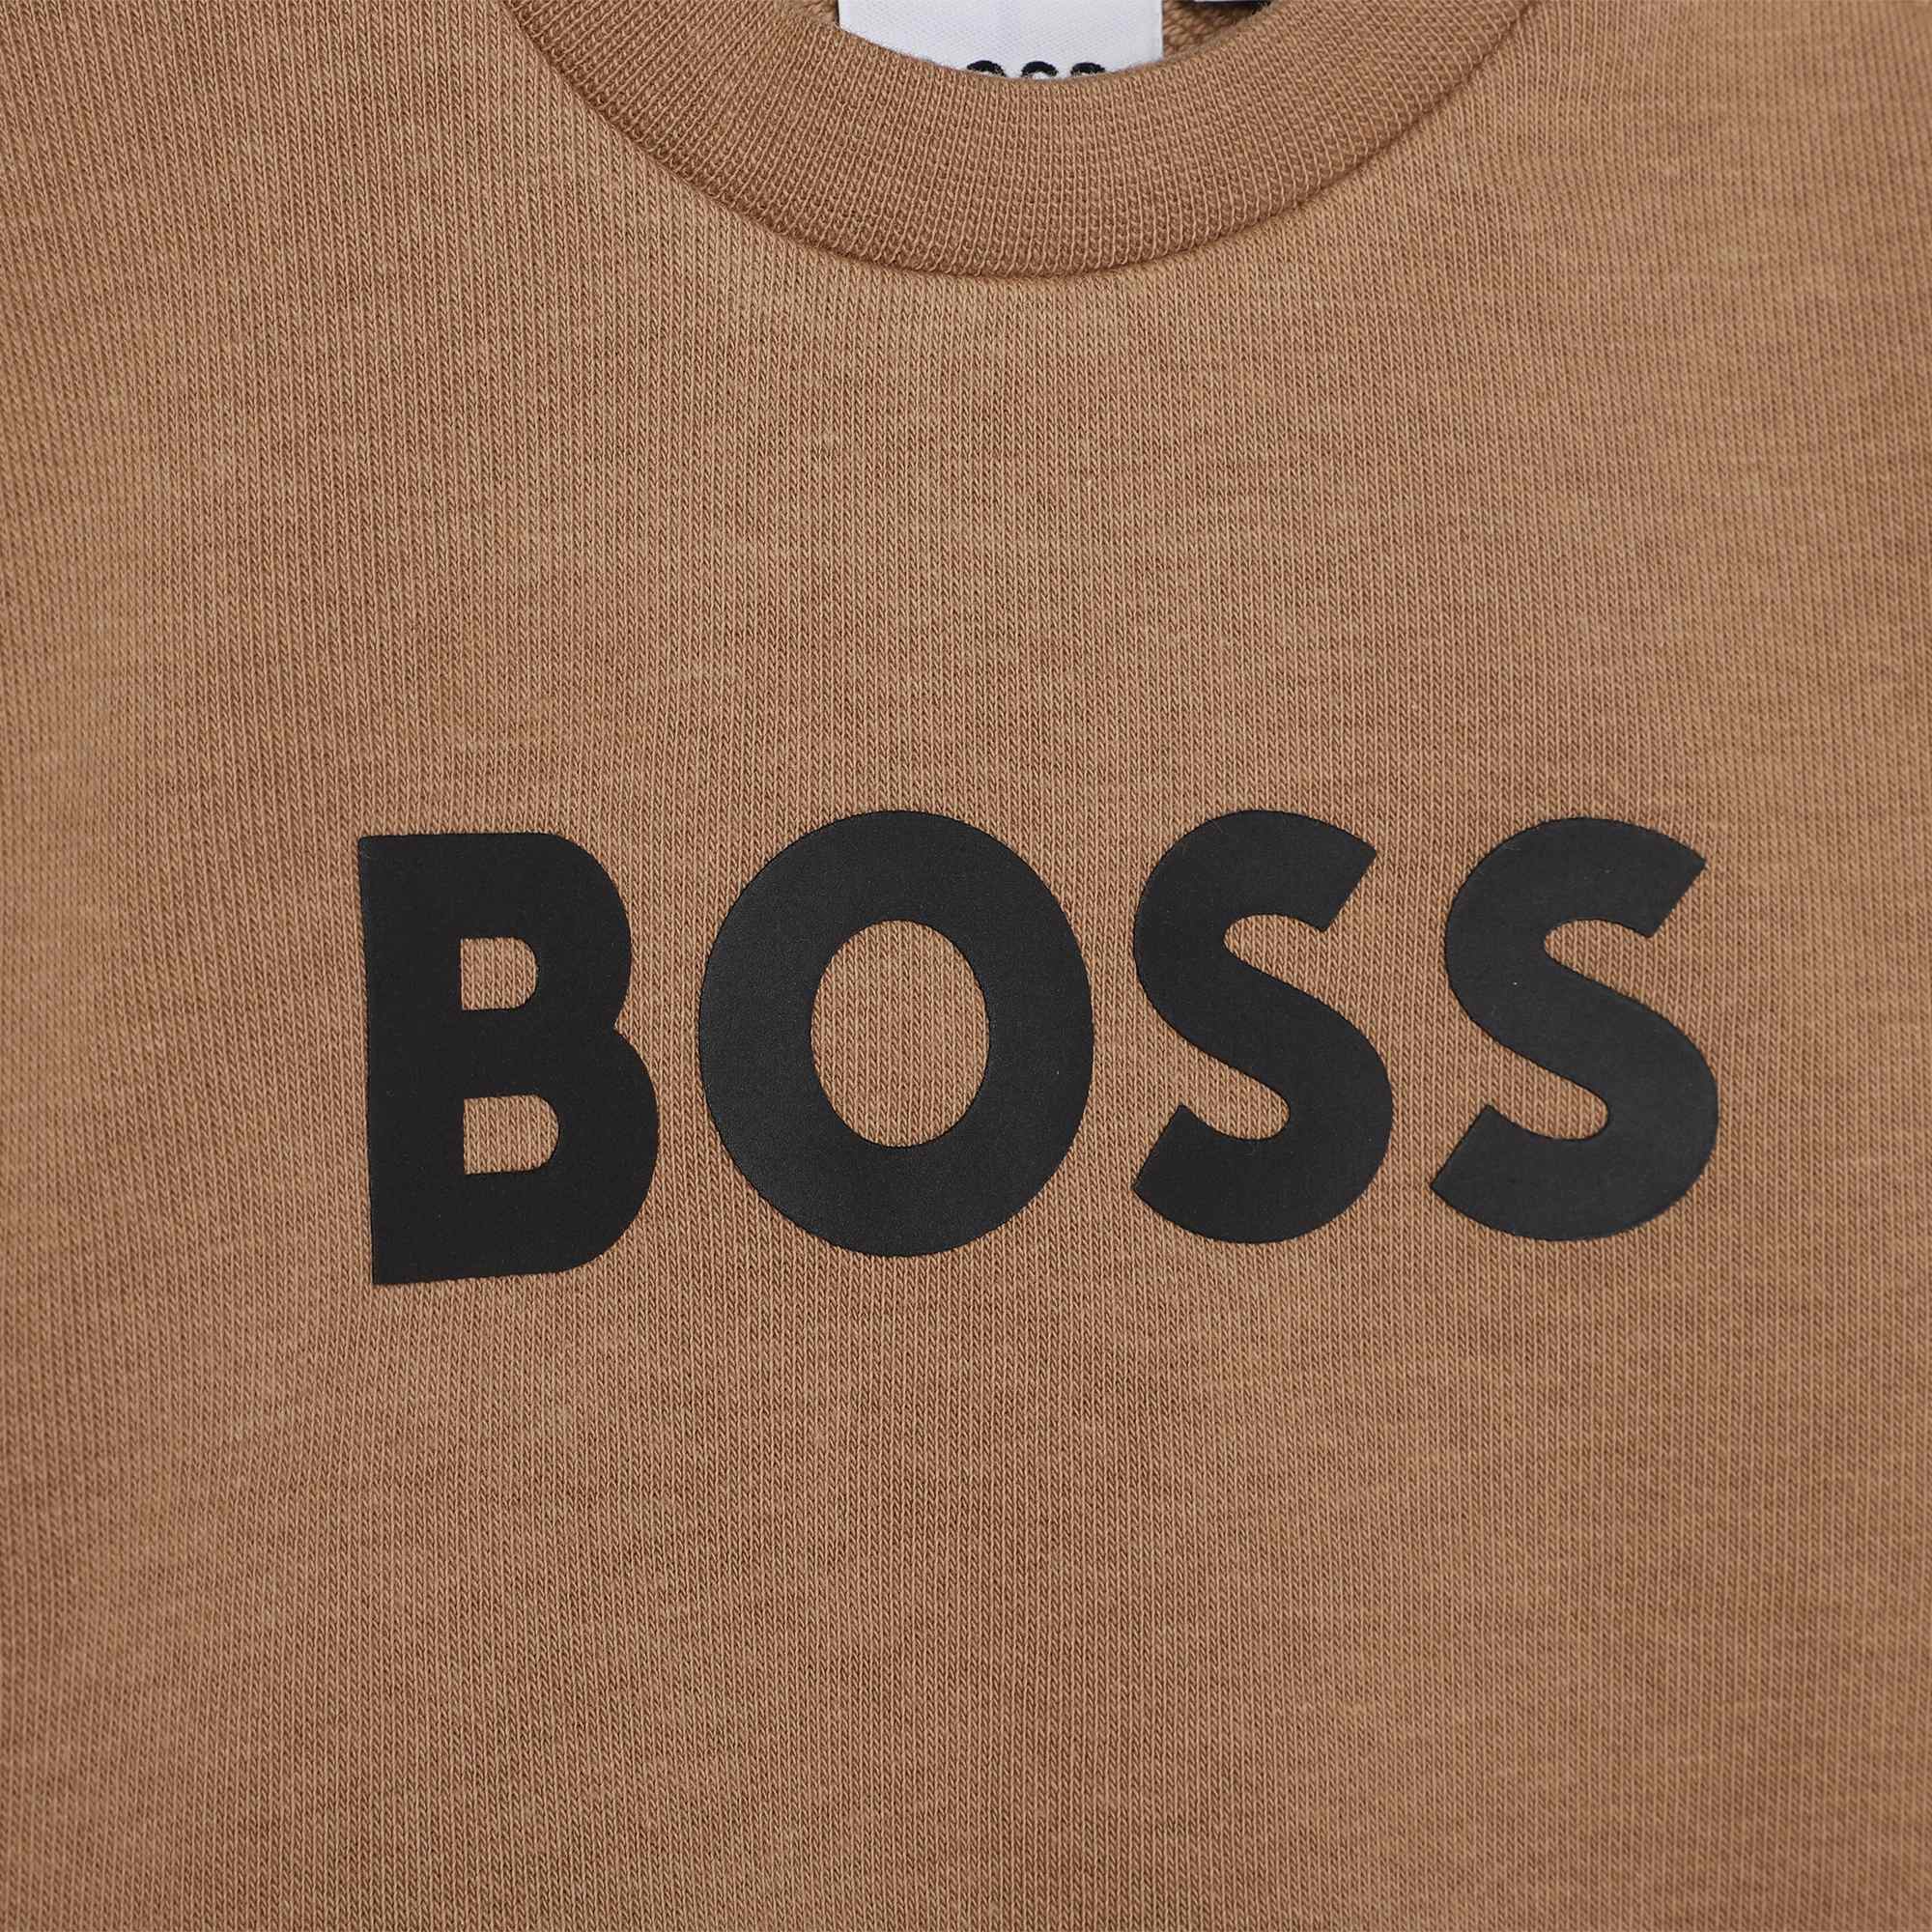 Cotton-rich sweatshirt BOSS for BOY